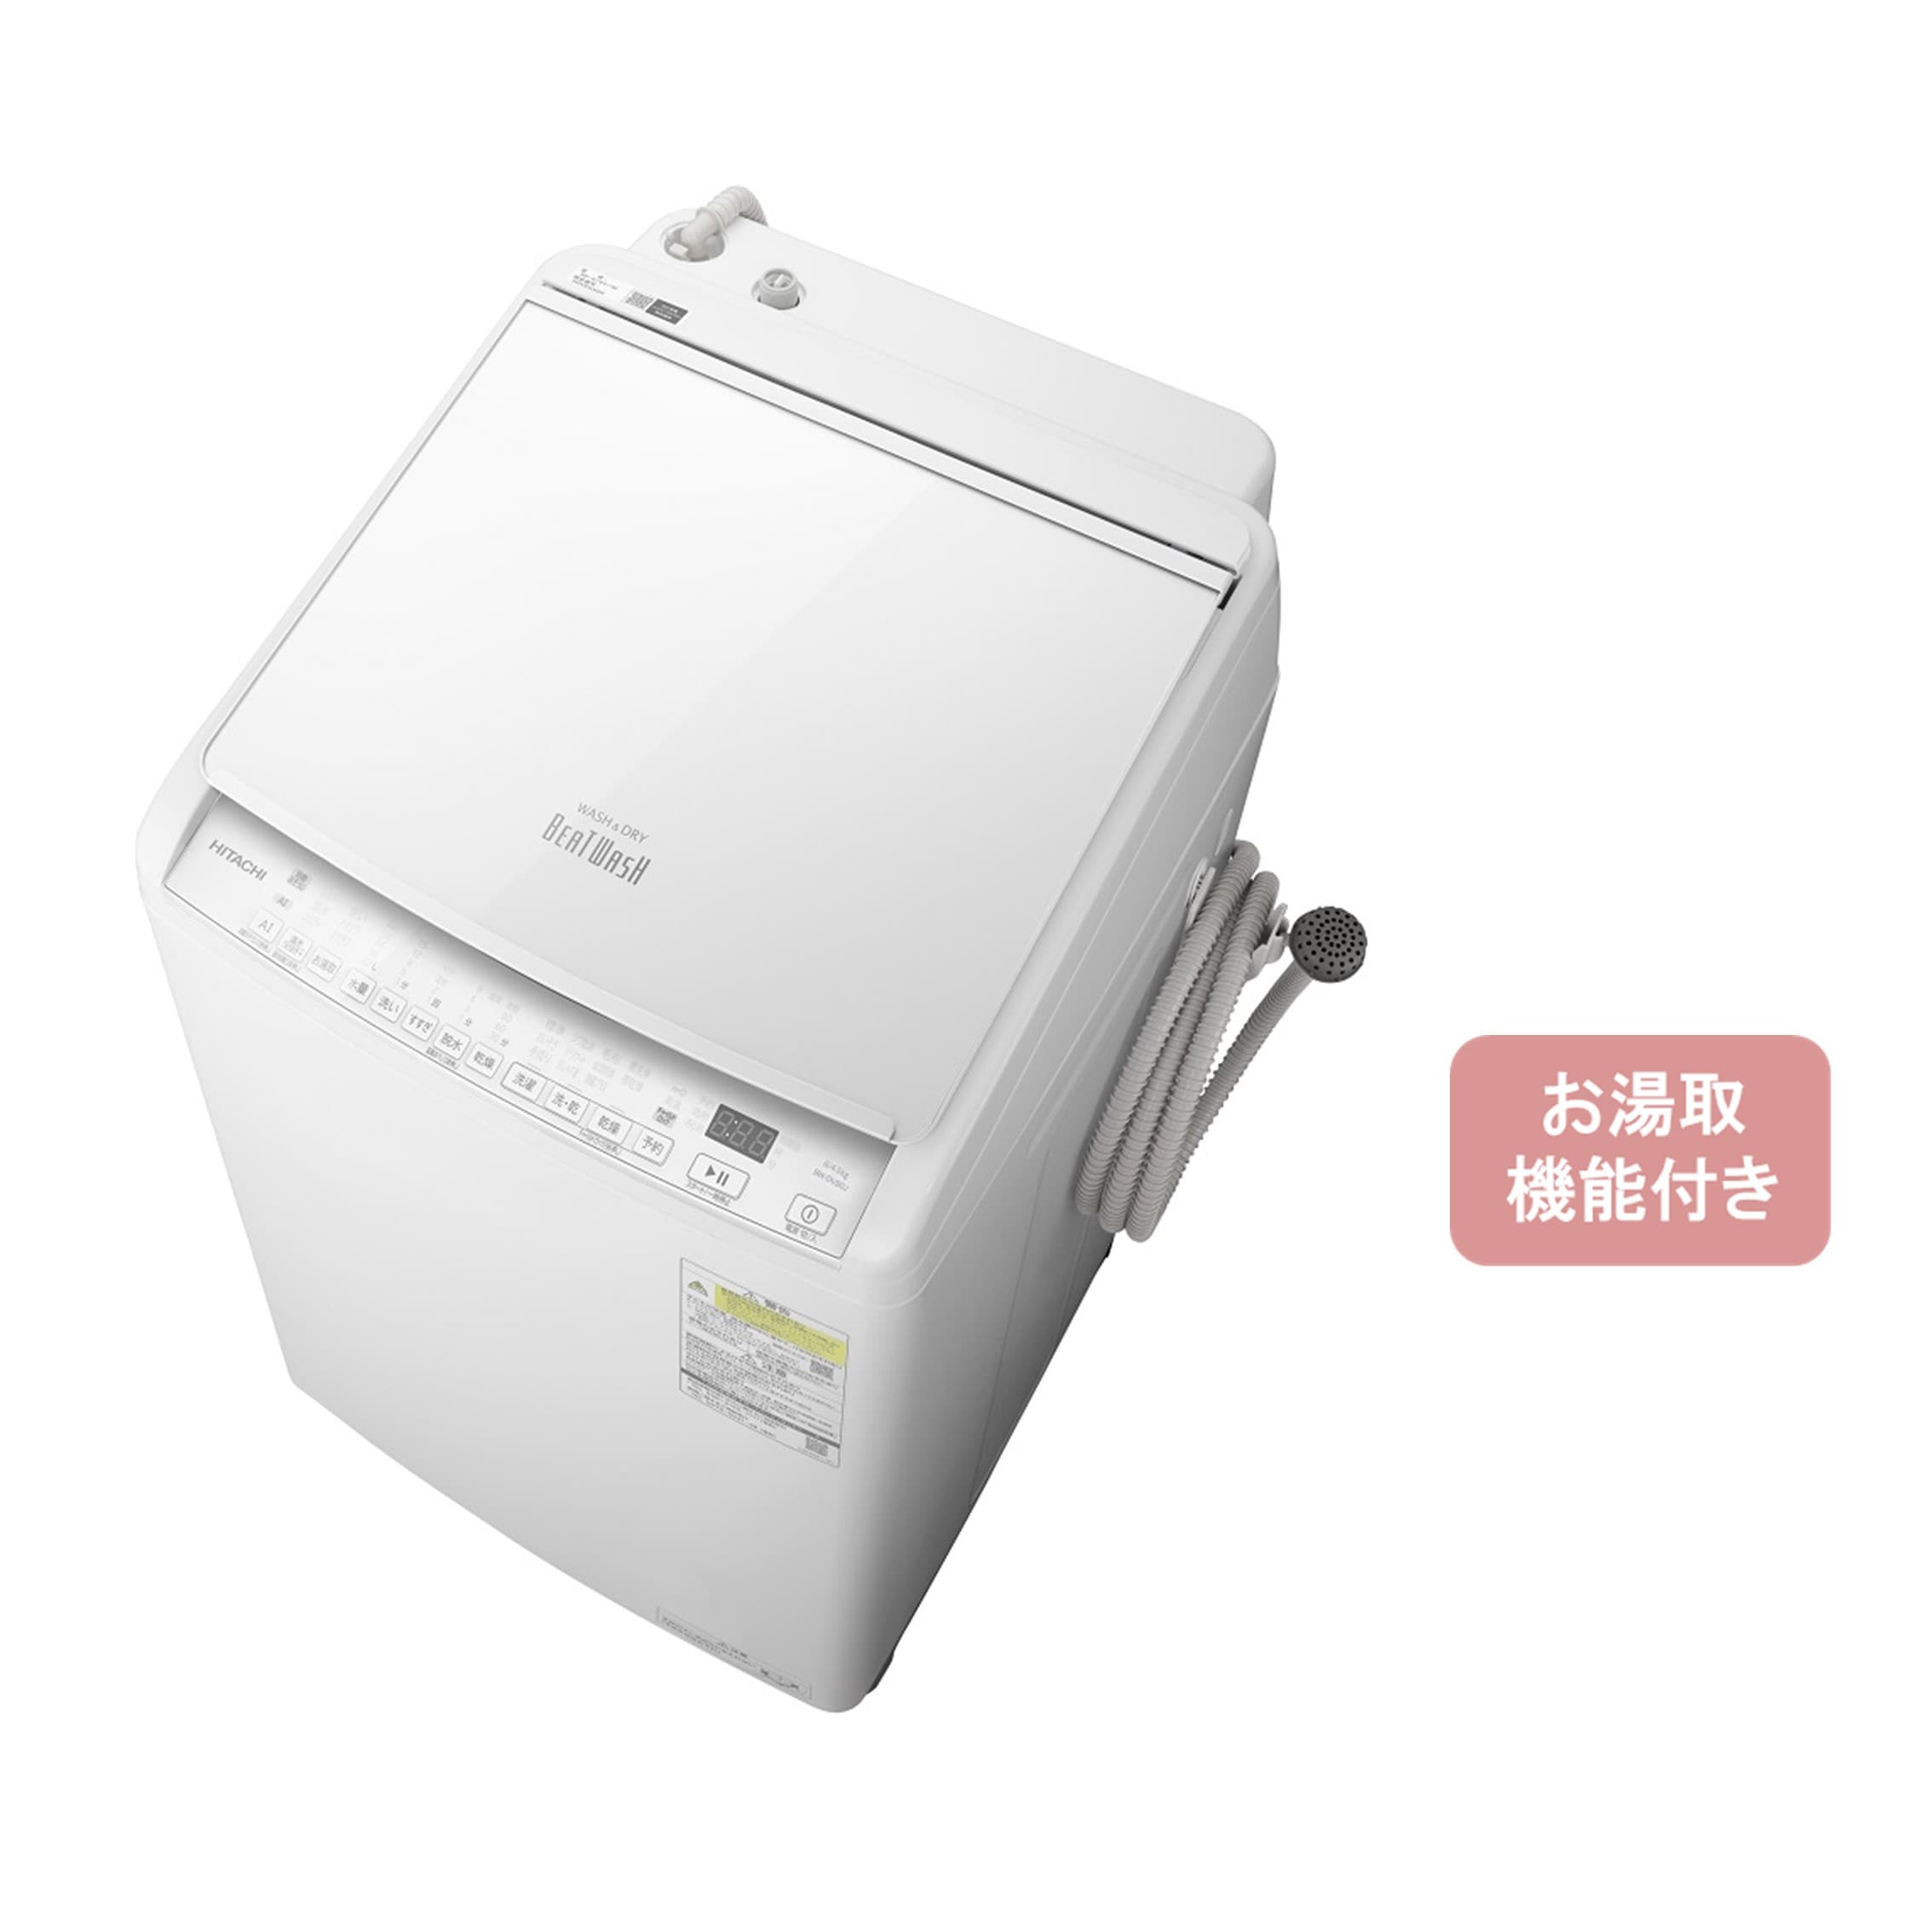 ♦️HITACHI a1966 洗濯機 12.0kg 2019年製 30♦️関西リユース本舗